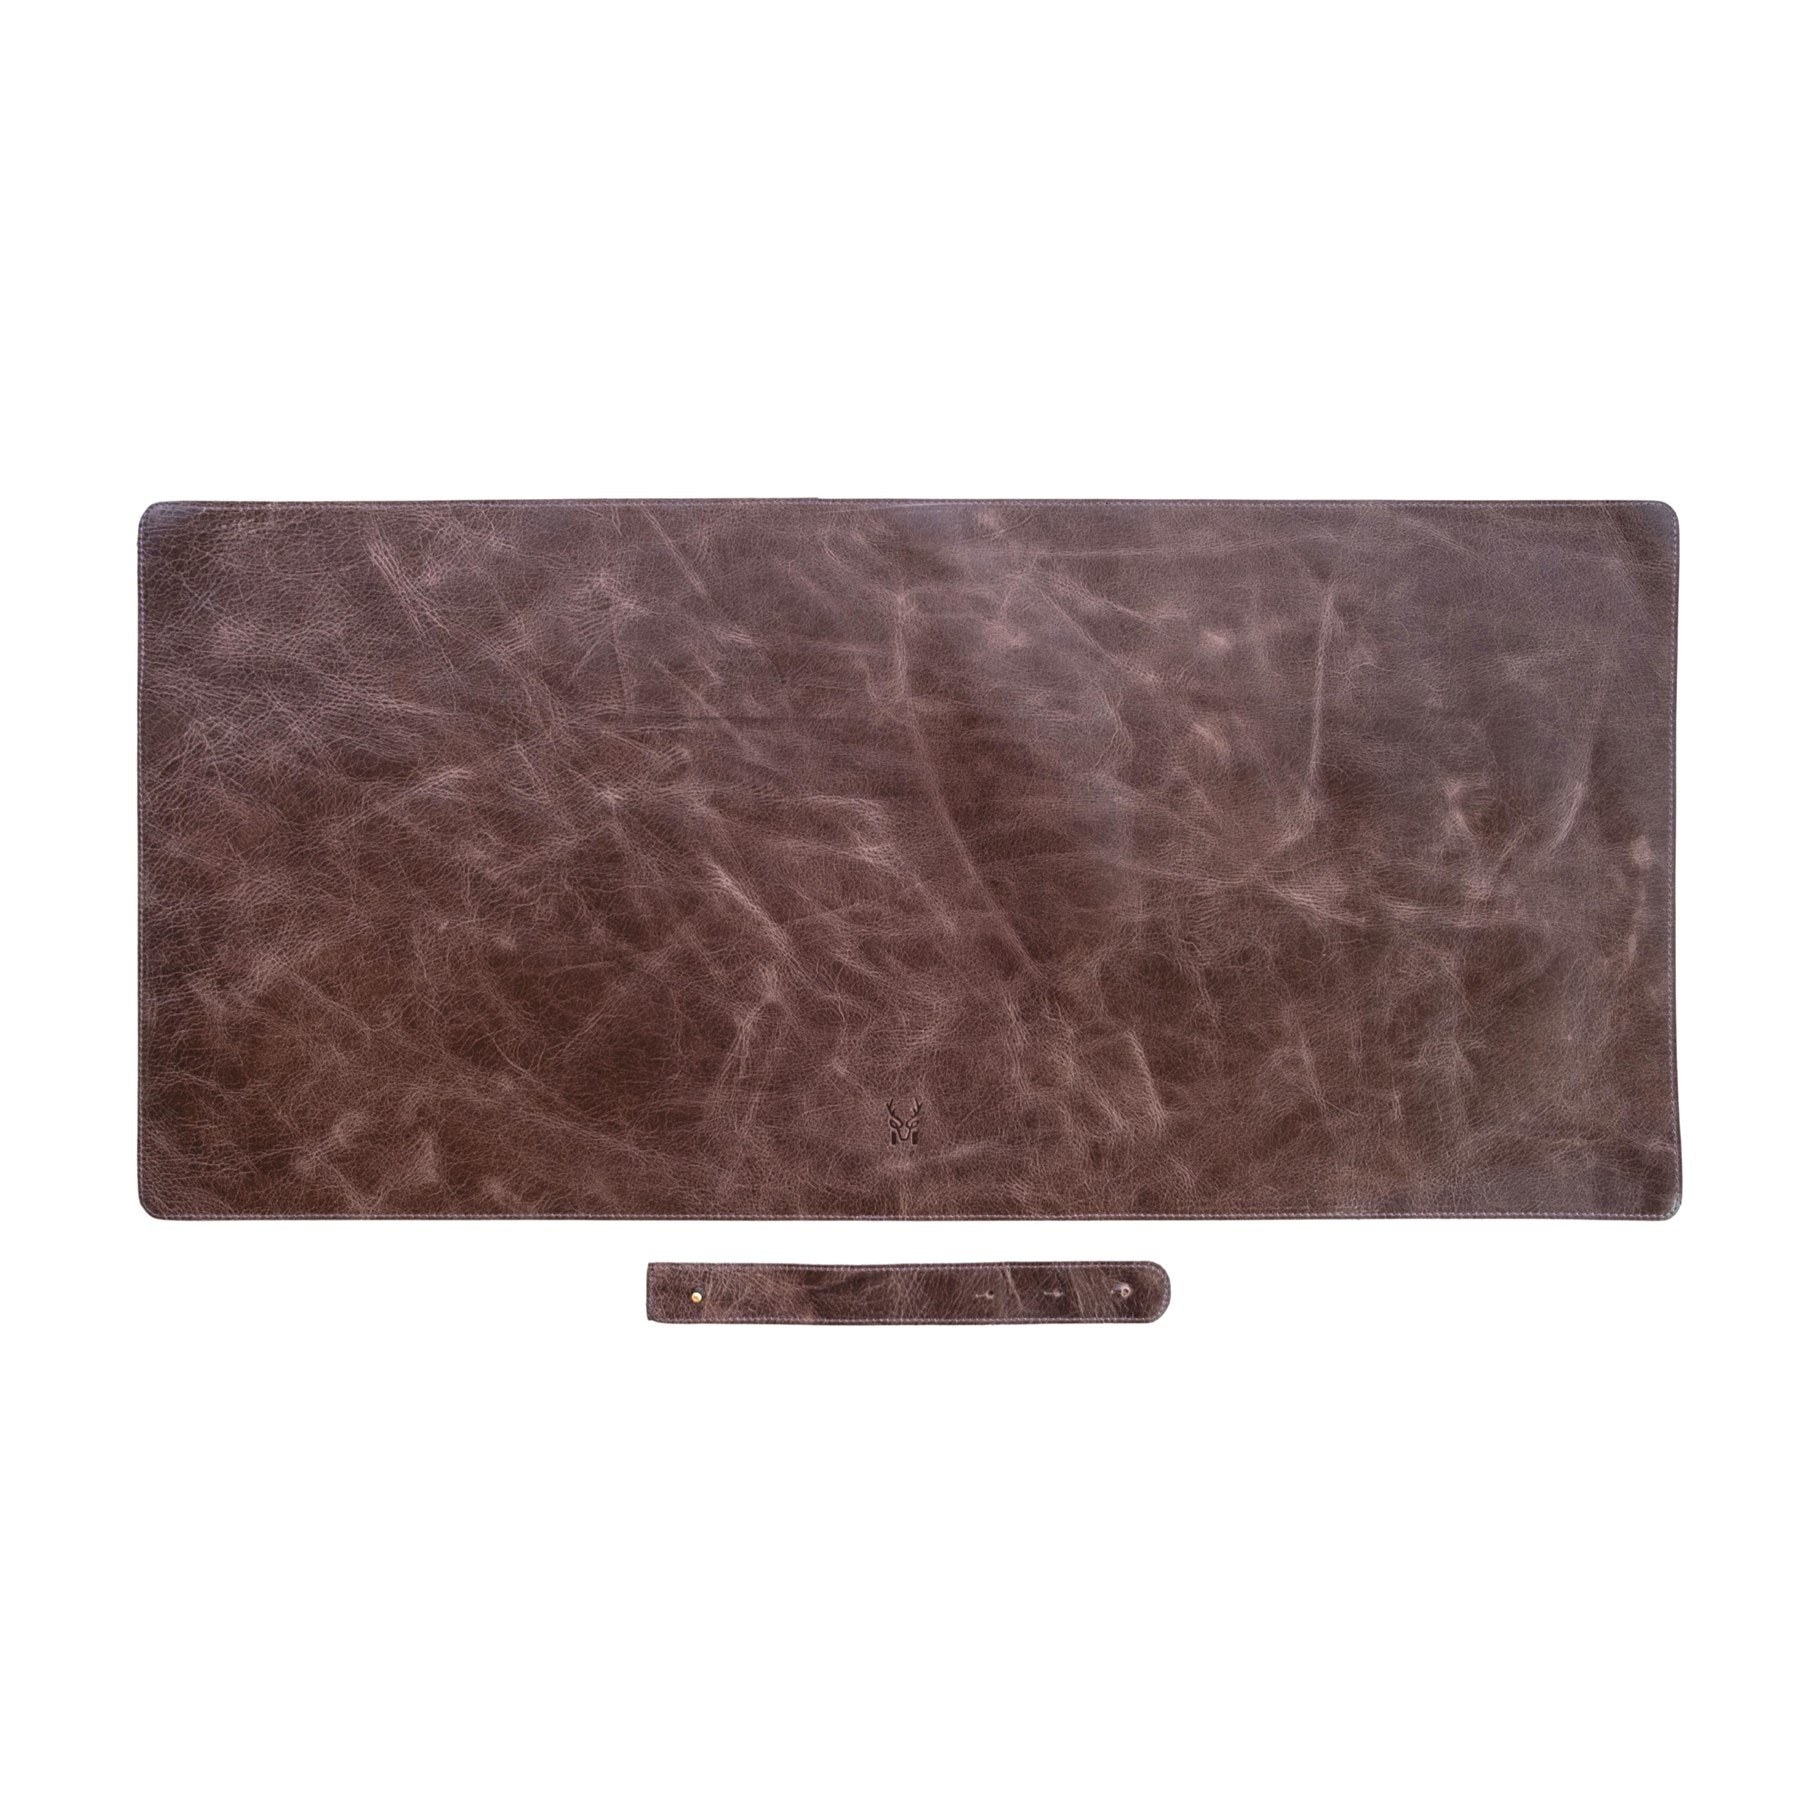 Hobart - Genuine Leather Luxury Desk Mat